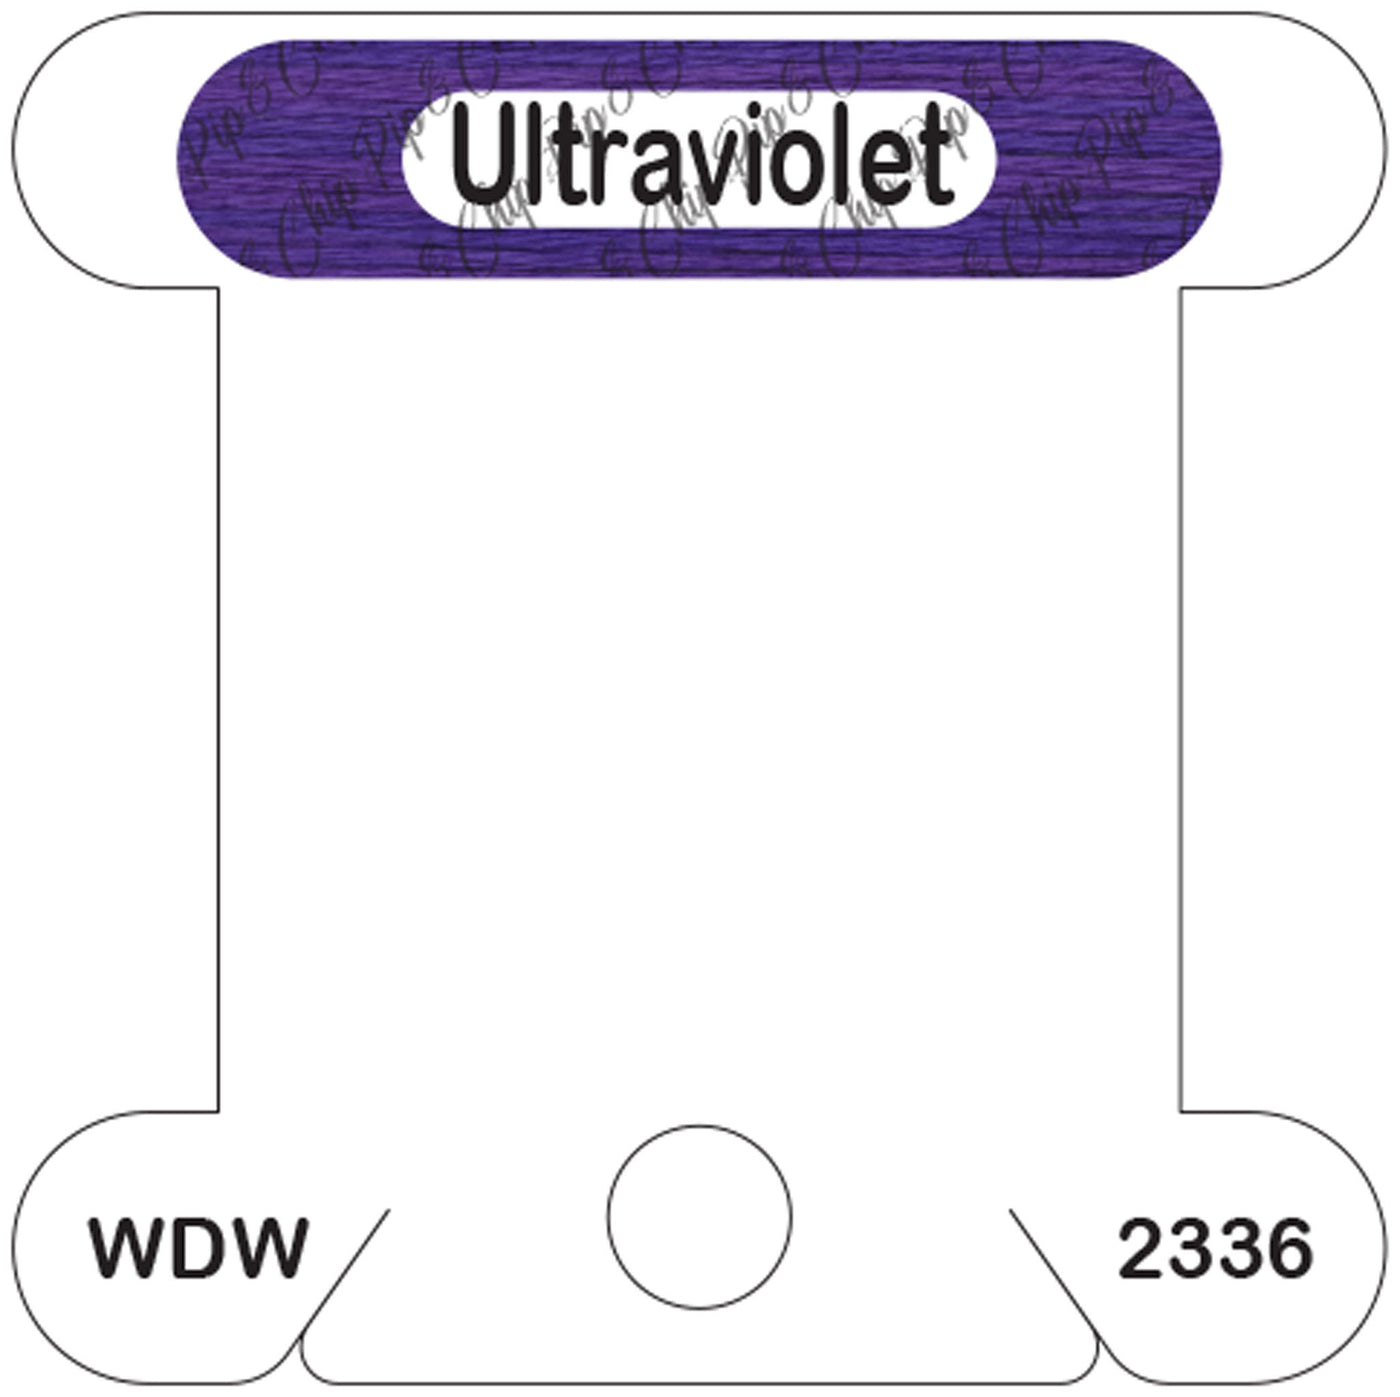 WDW Ultraviolet acrylic bobbin